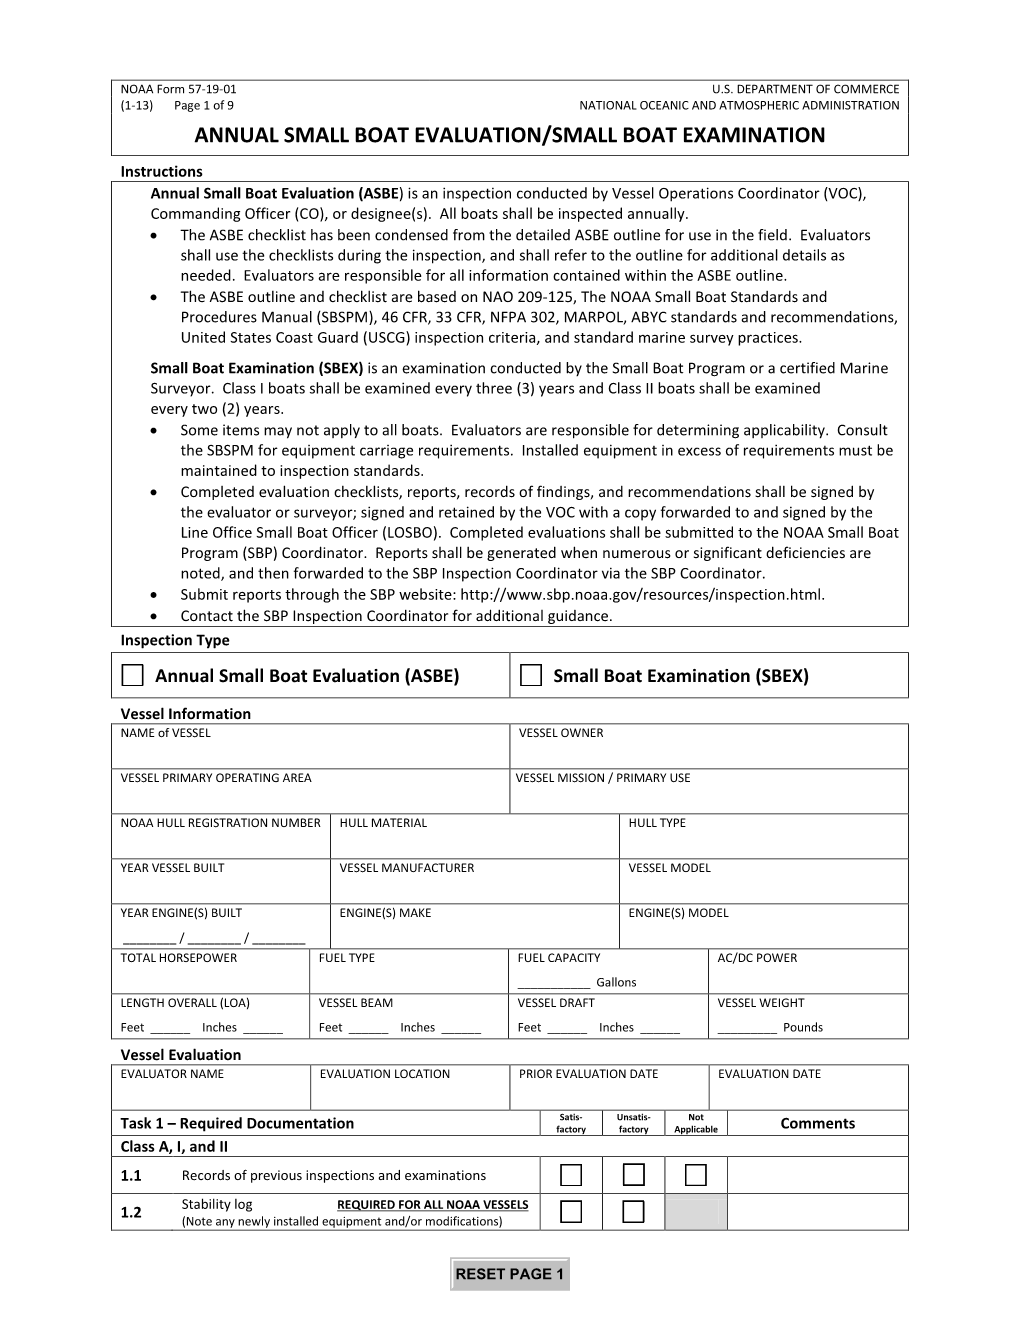 NOAA Form 57-19-01 Annual Small Boat Evaluation/Small Boat